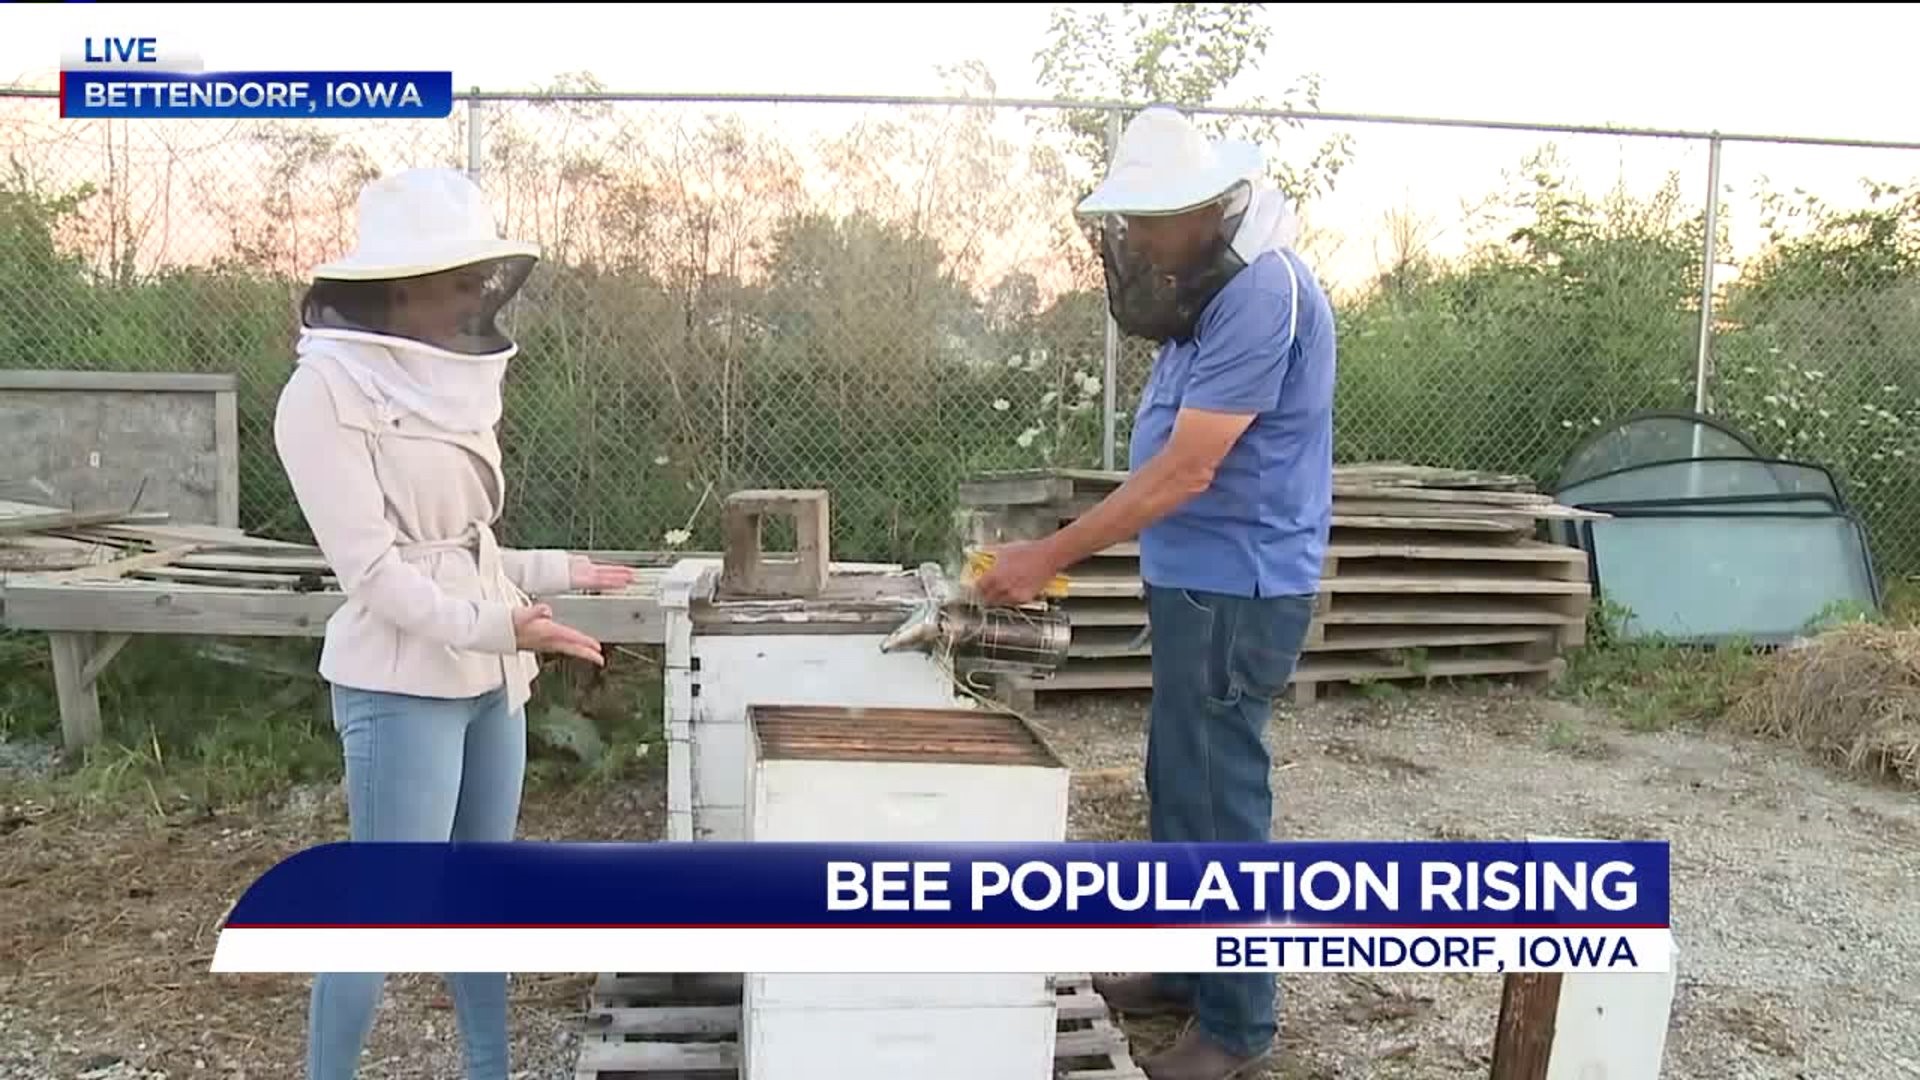 Bee populations rising